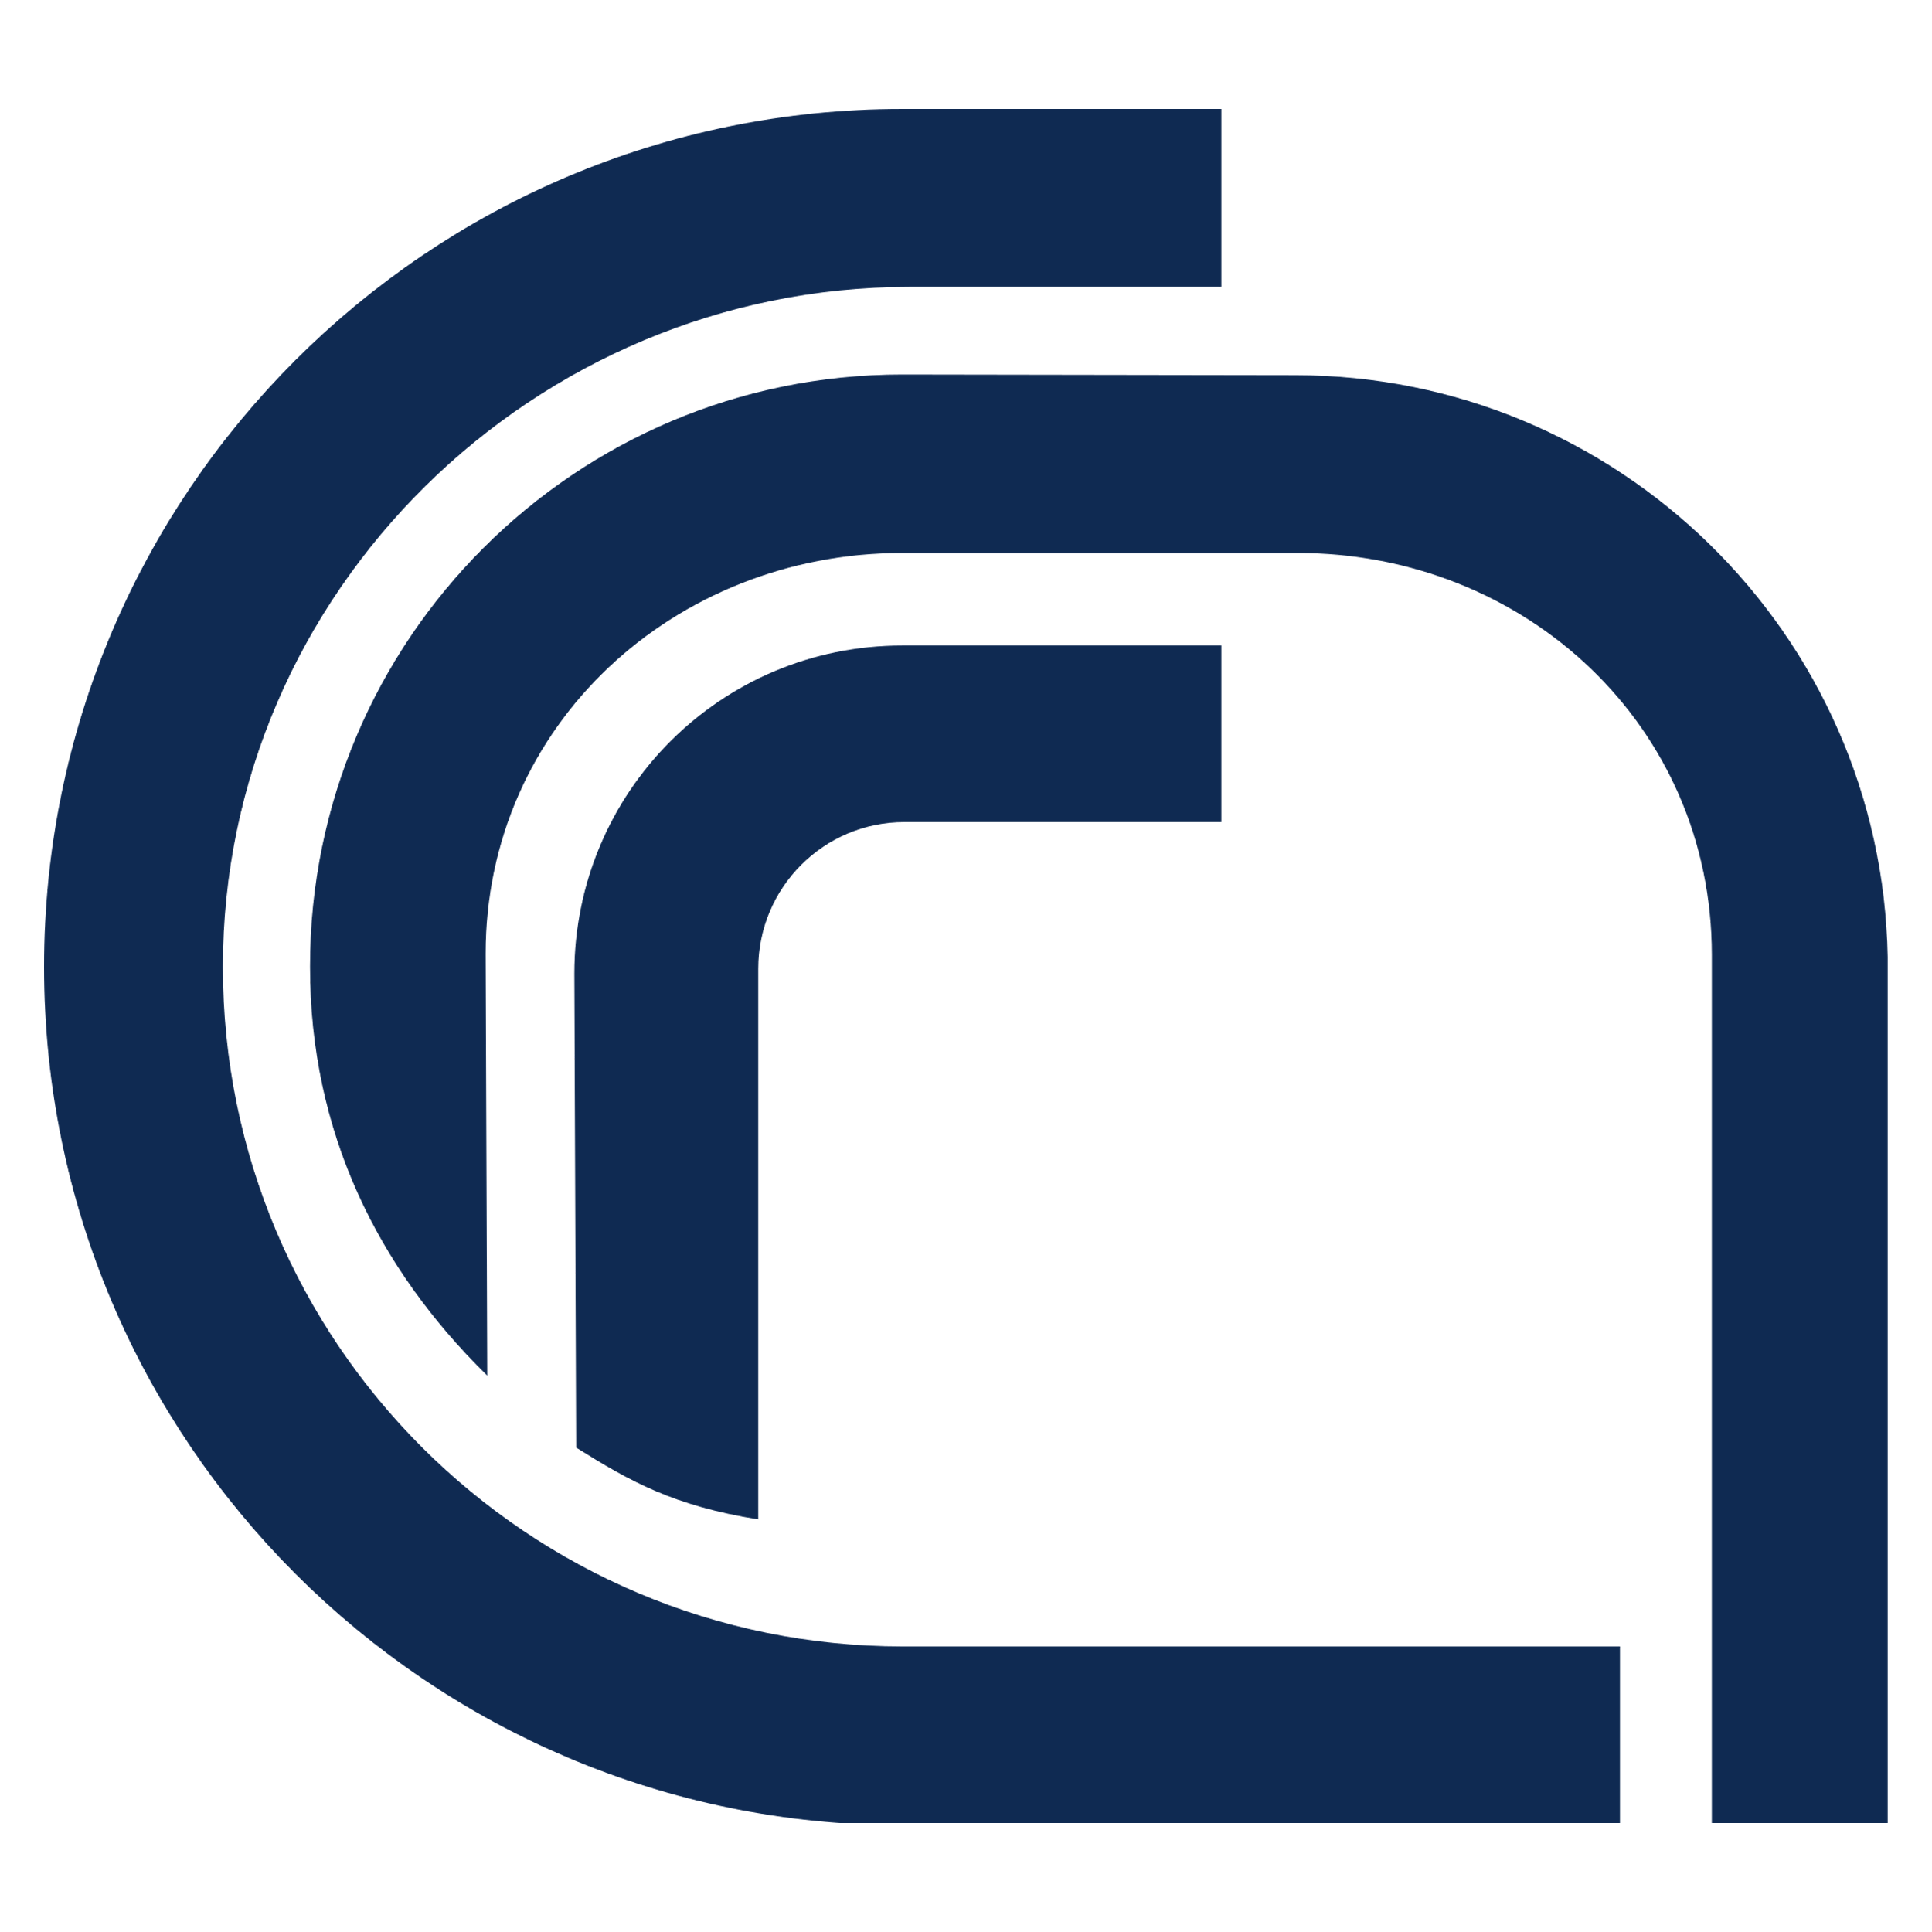 CNR Without Text Logo  Transparent Image